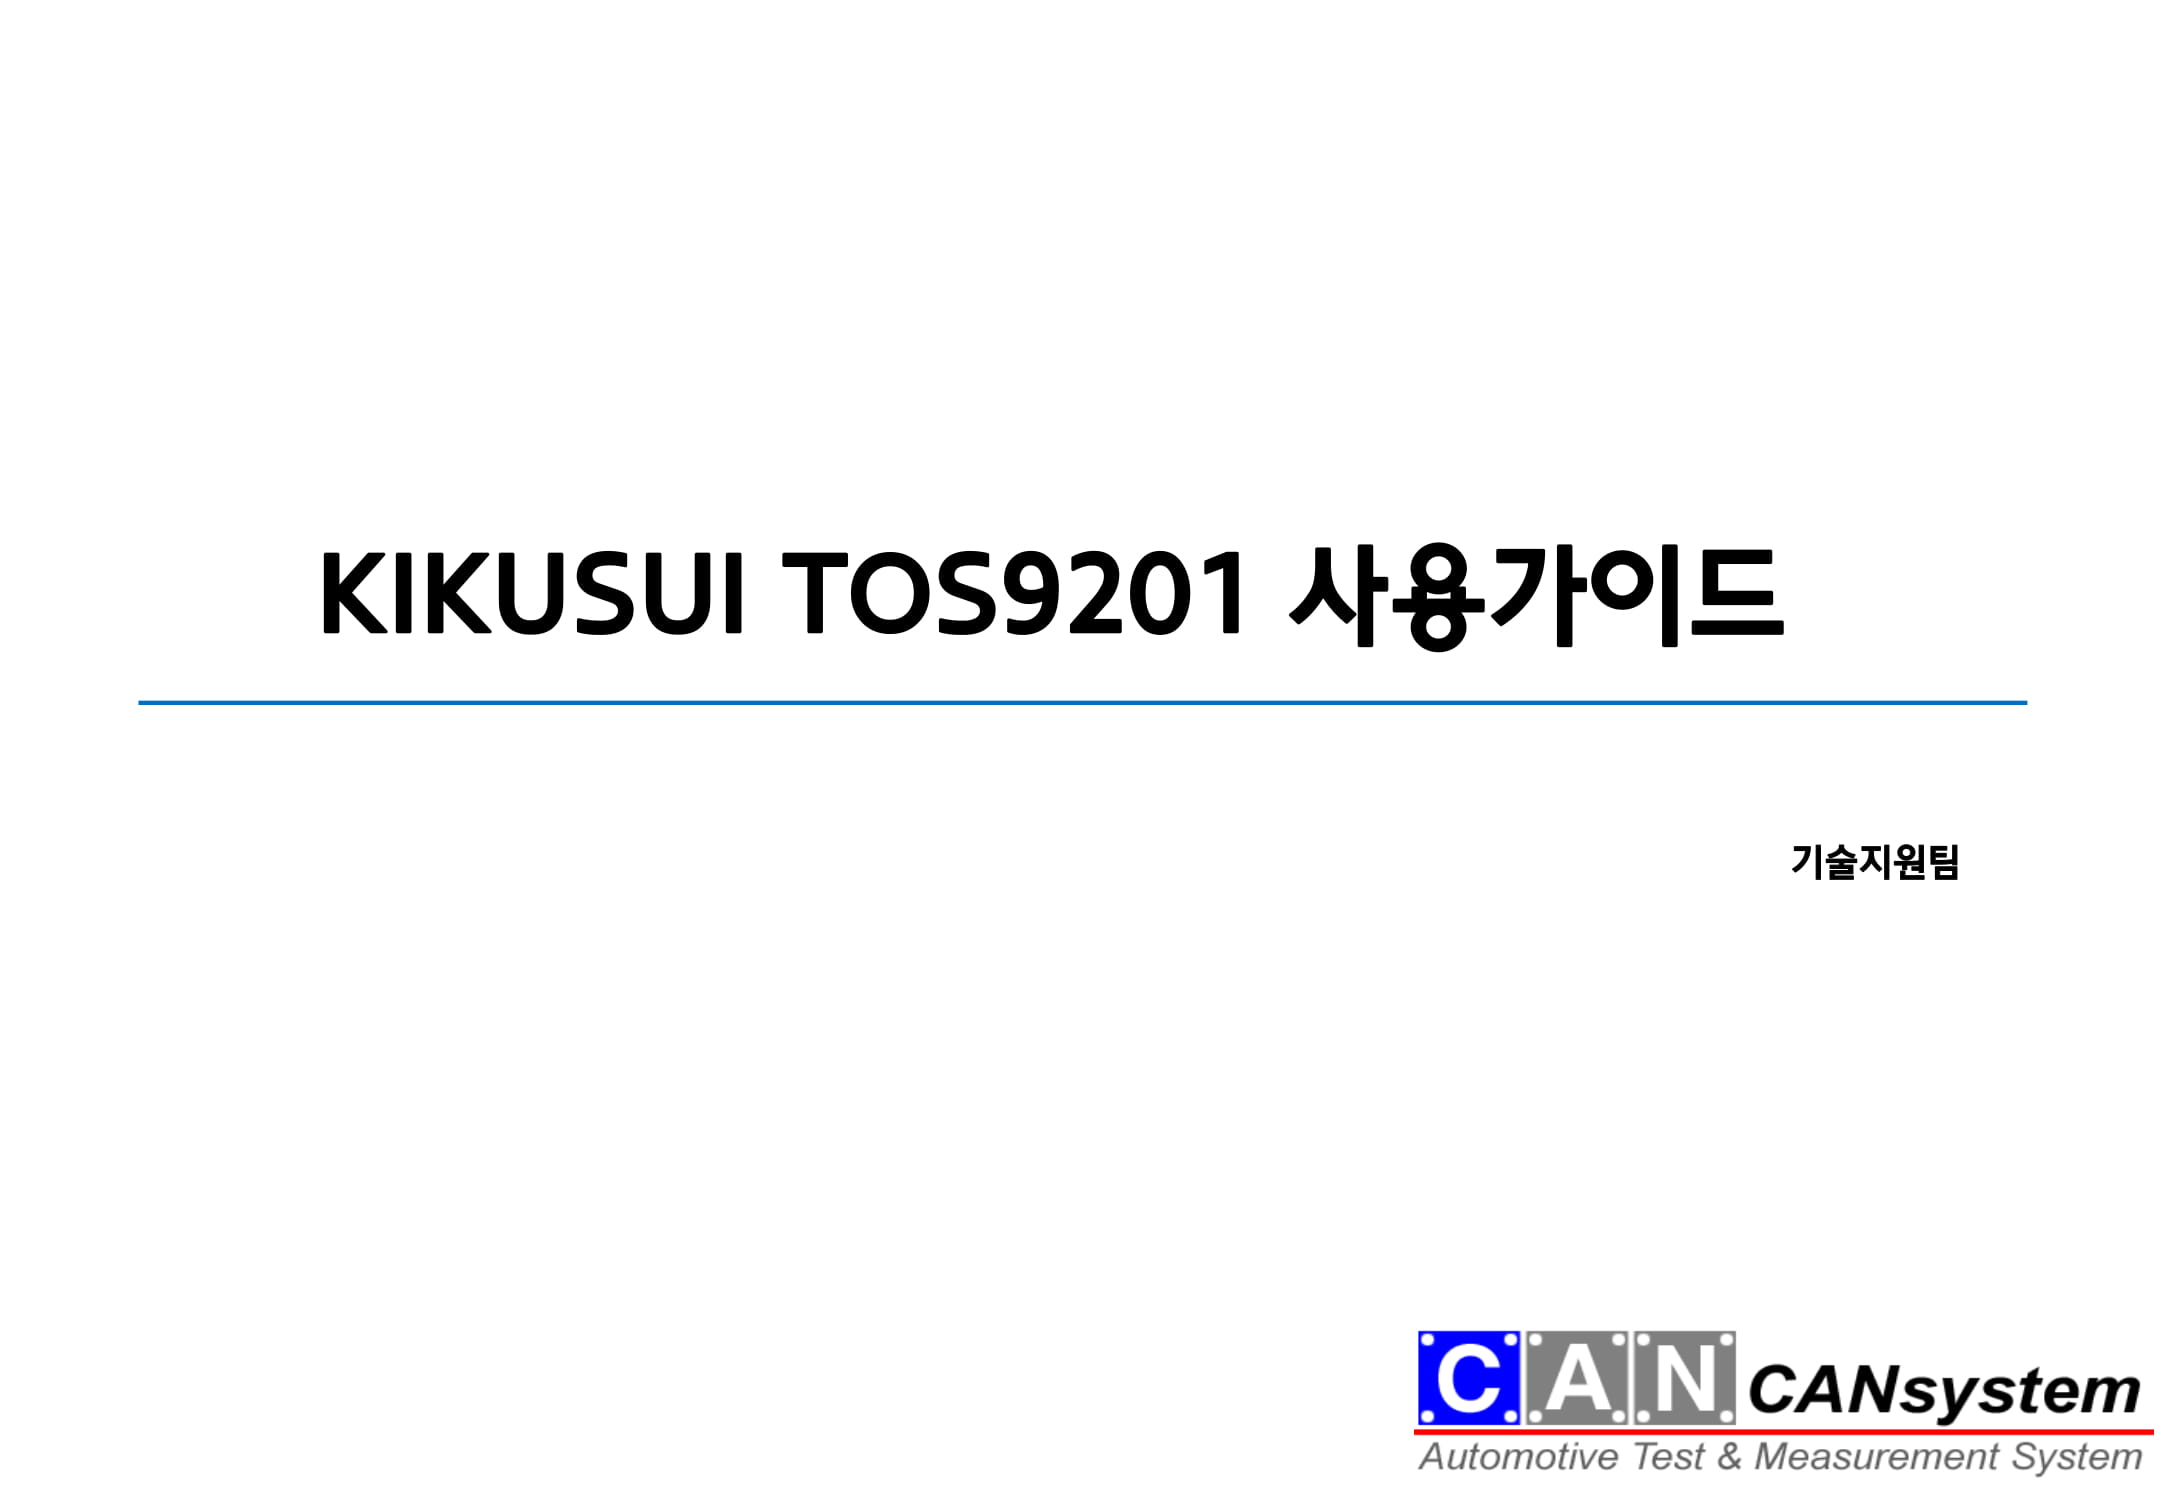 KIKUSUI TOS9201 국문 이용가이드-01.jpg